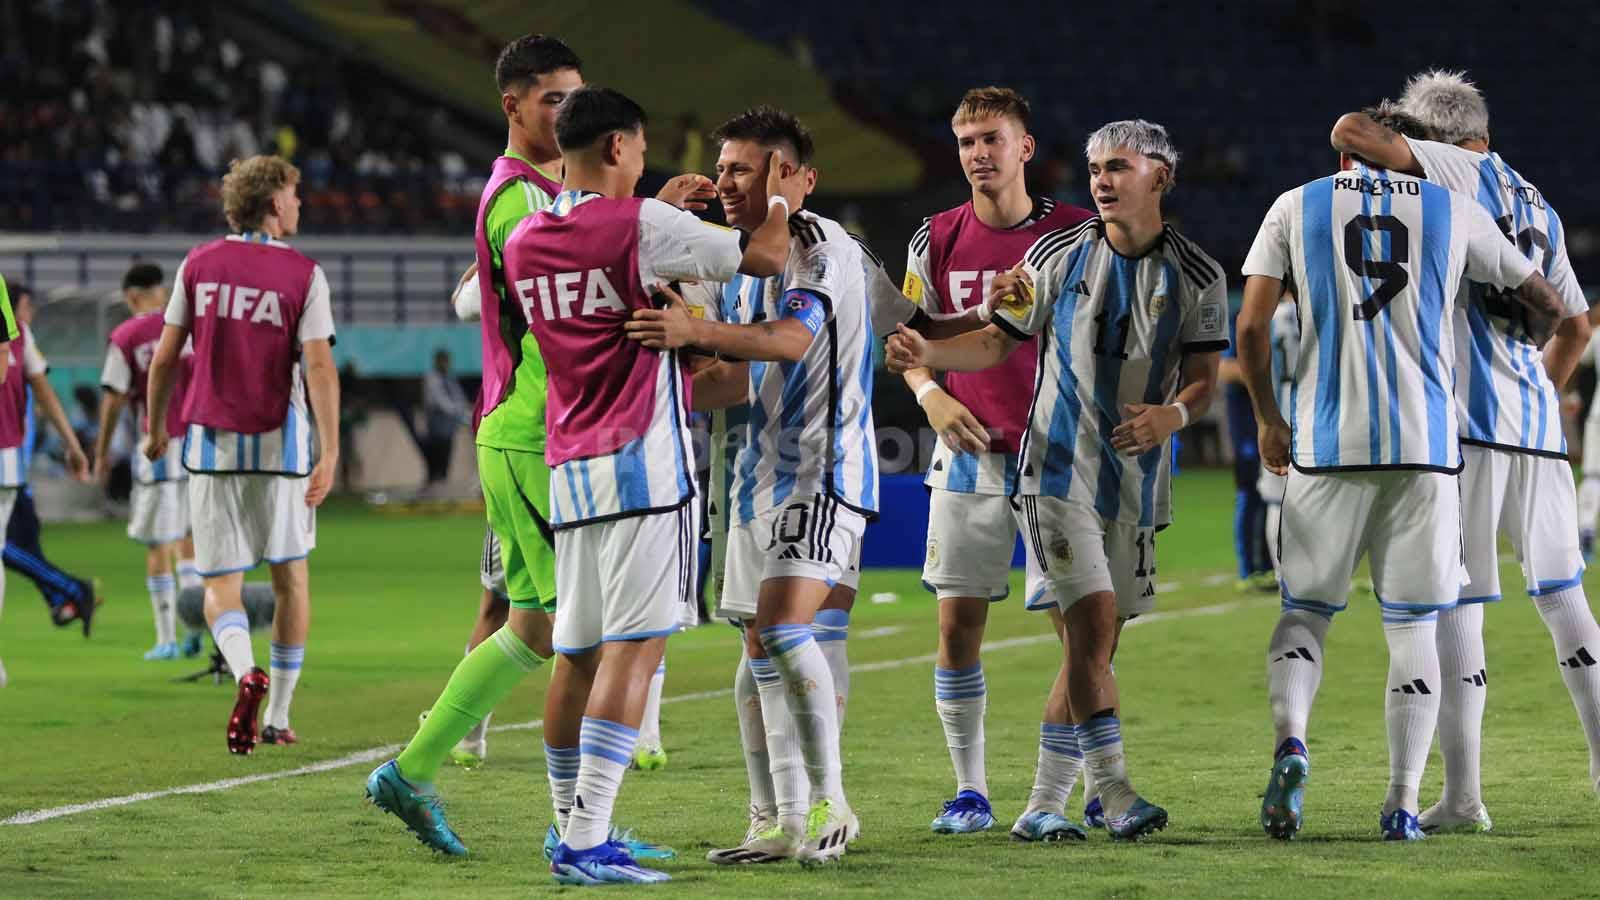 Gelandang Timnas Argentina U-17, Claudio Echeverri, melakukan selebrasi usai mencetak gol ke gawang Timnas Jepang U-17.